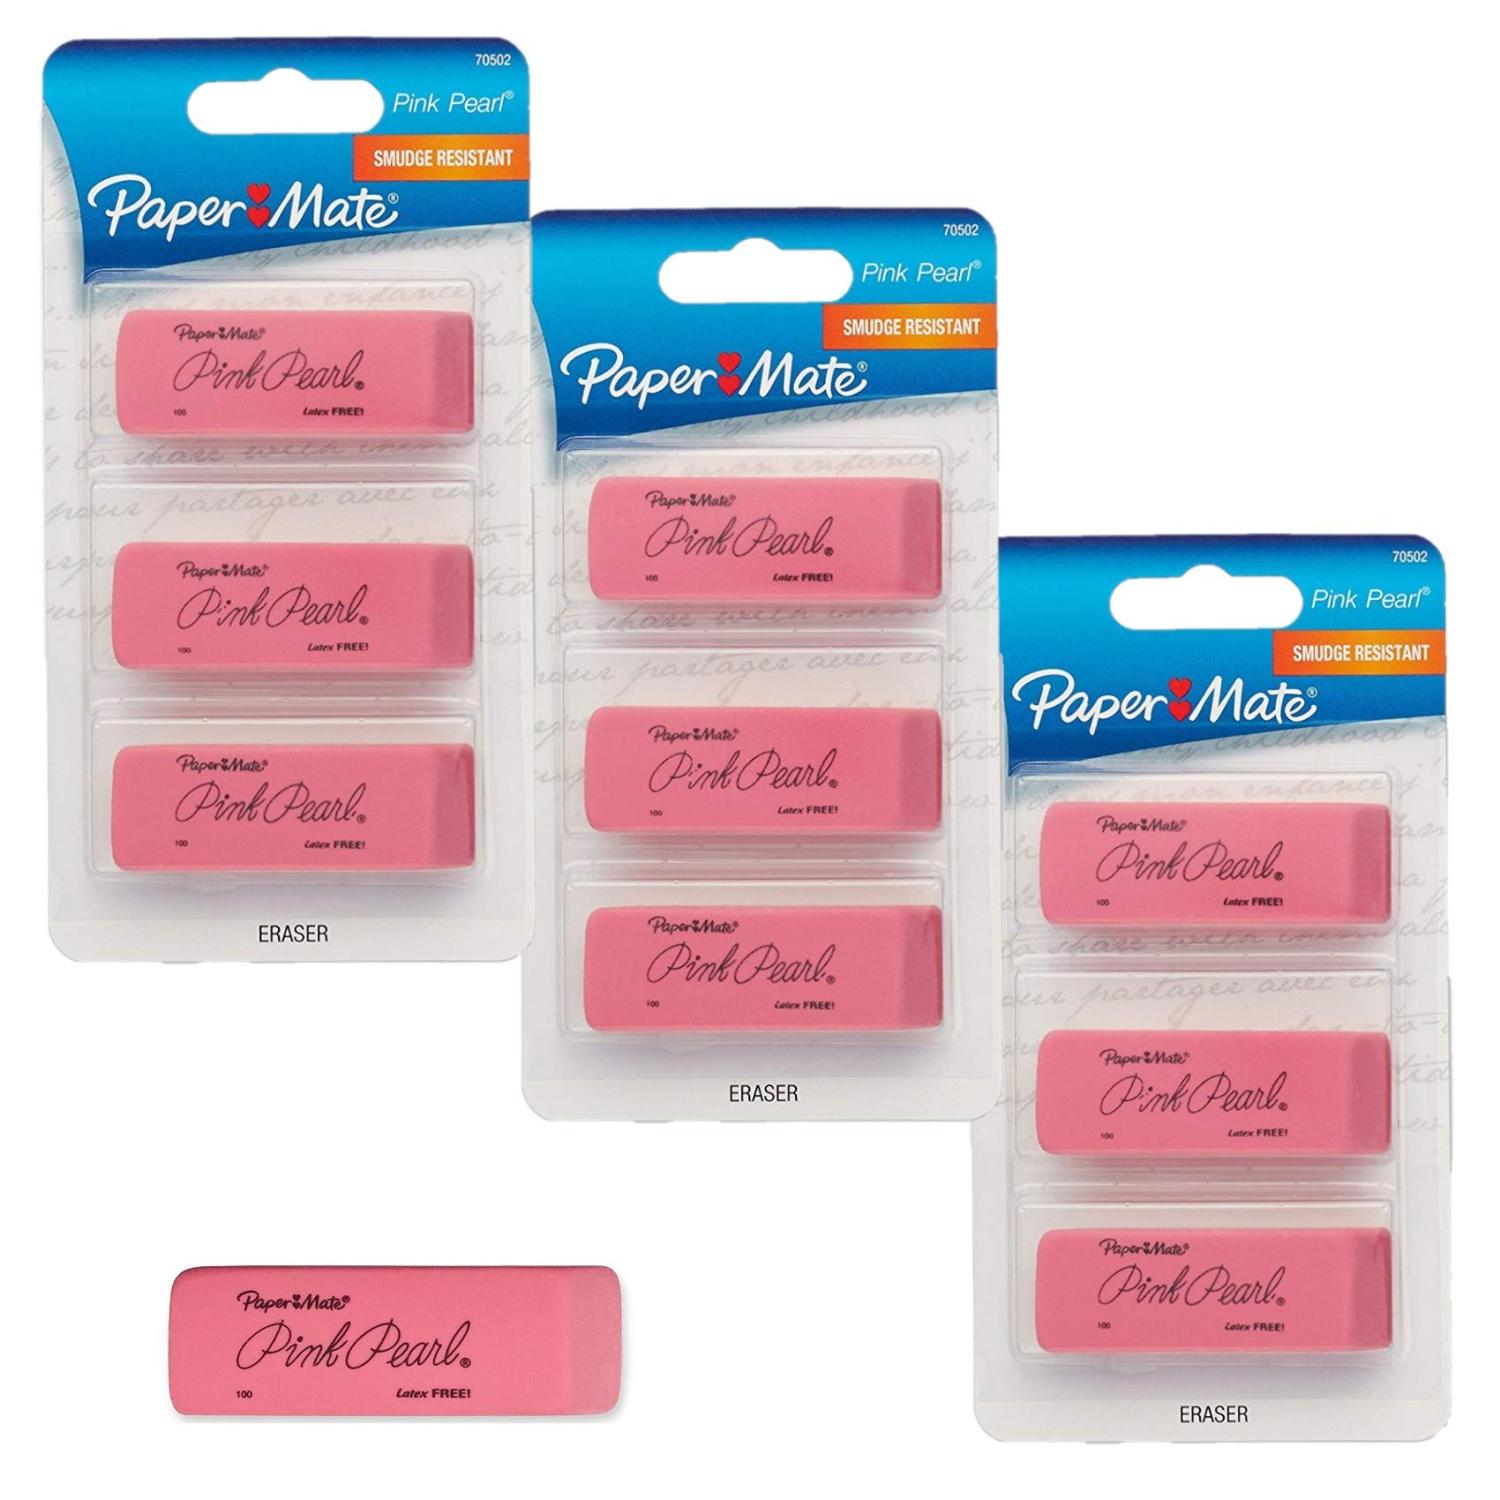 Pink Pearl Medium eraser each